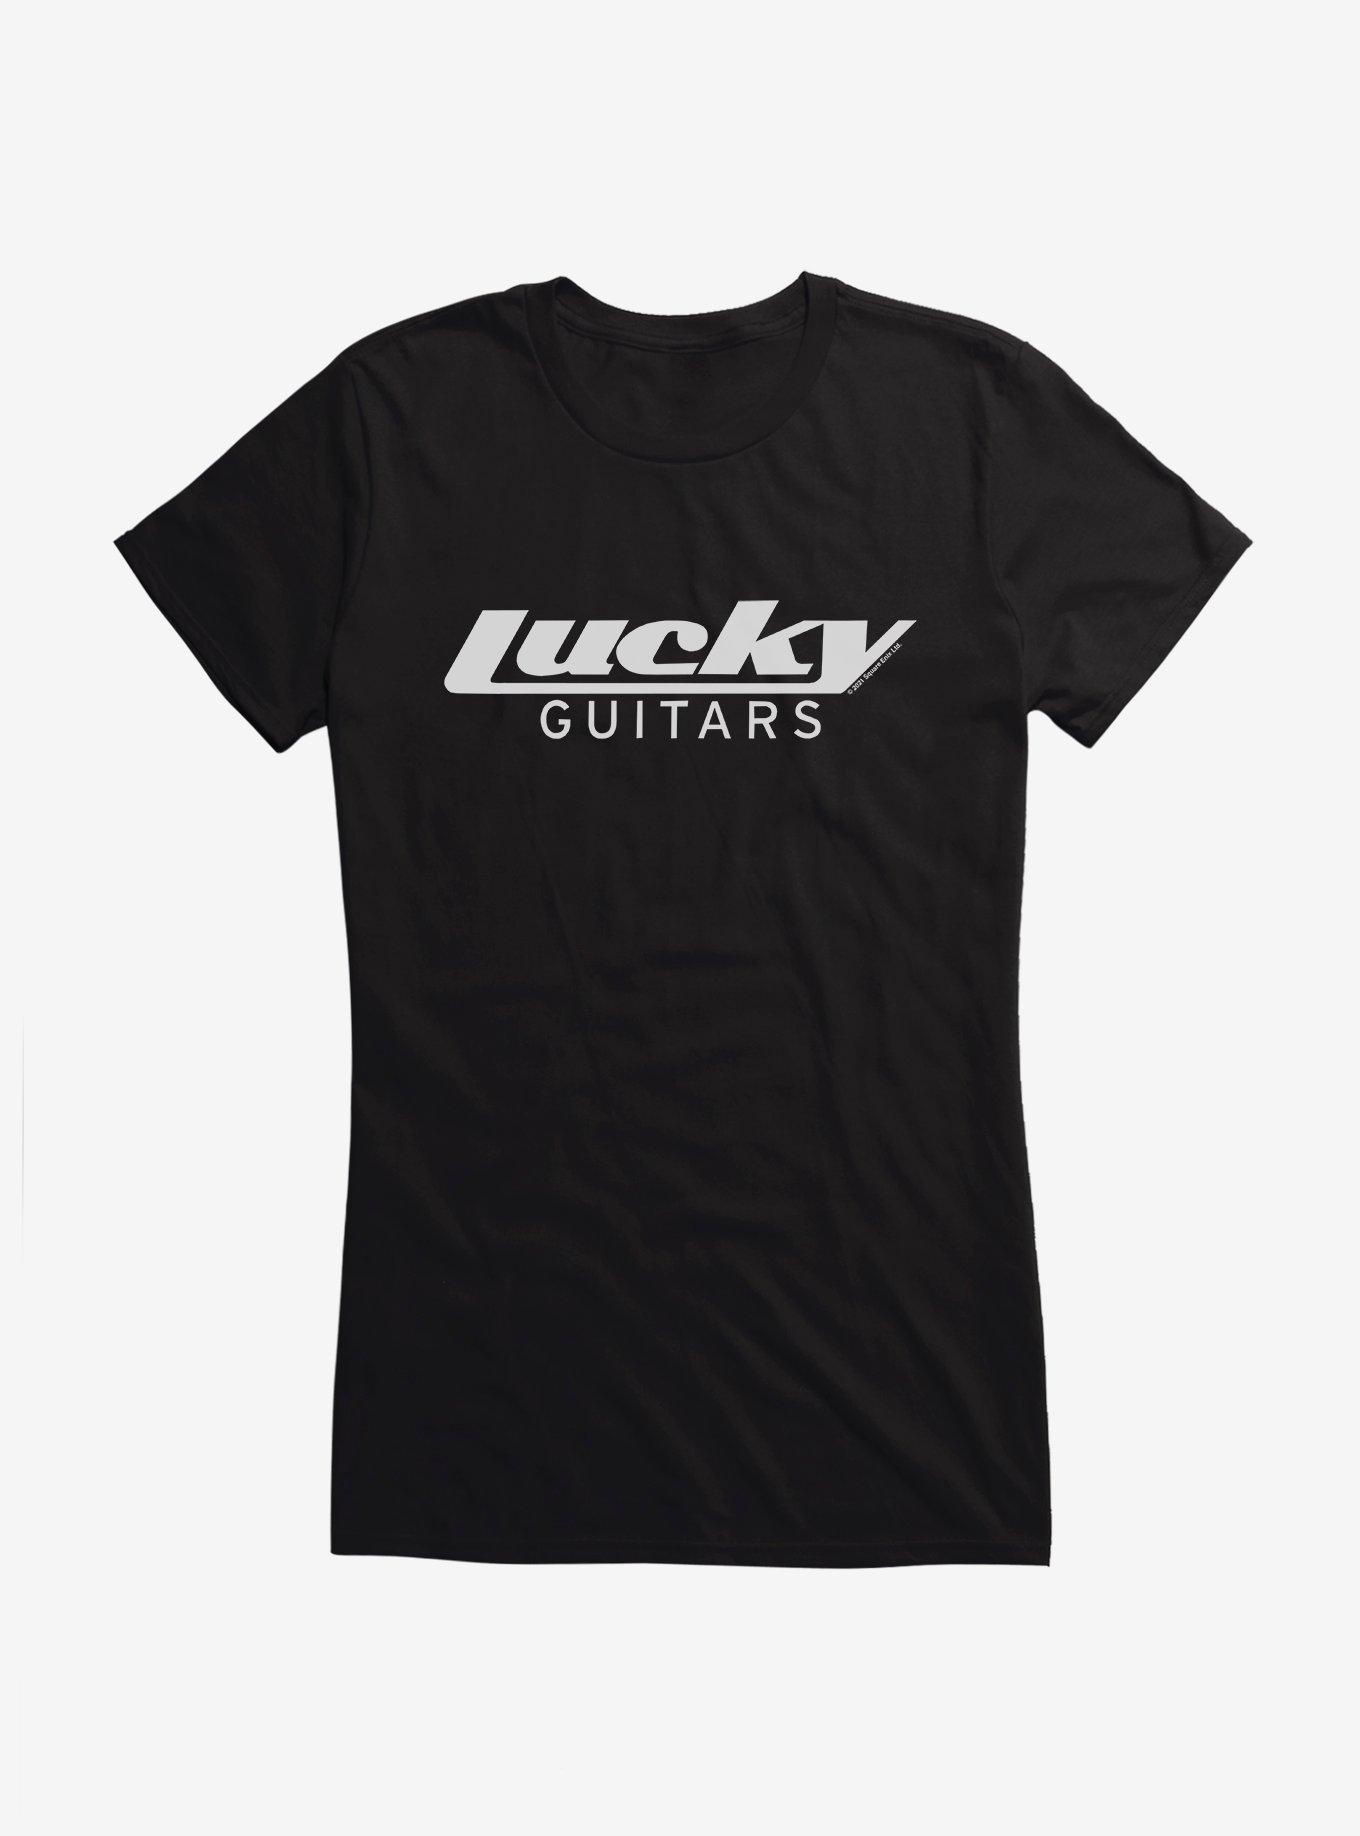 Square Enix Lucky Guitars Girls T-Shirt, BLACK, hi-res